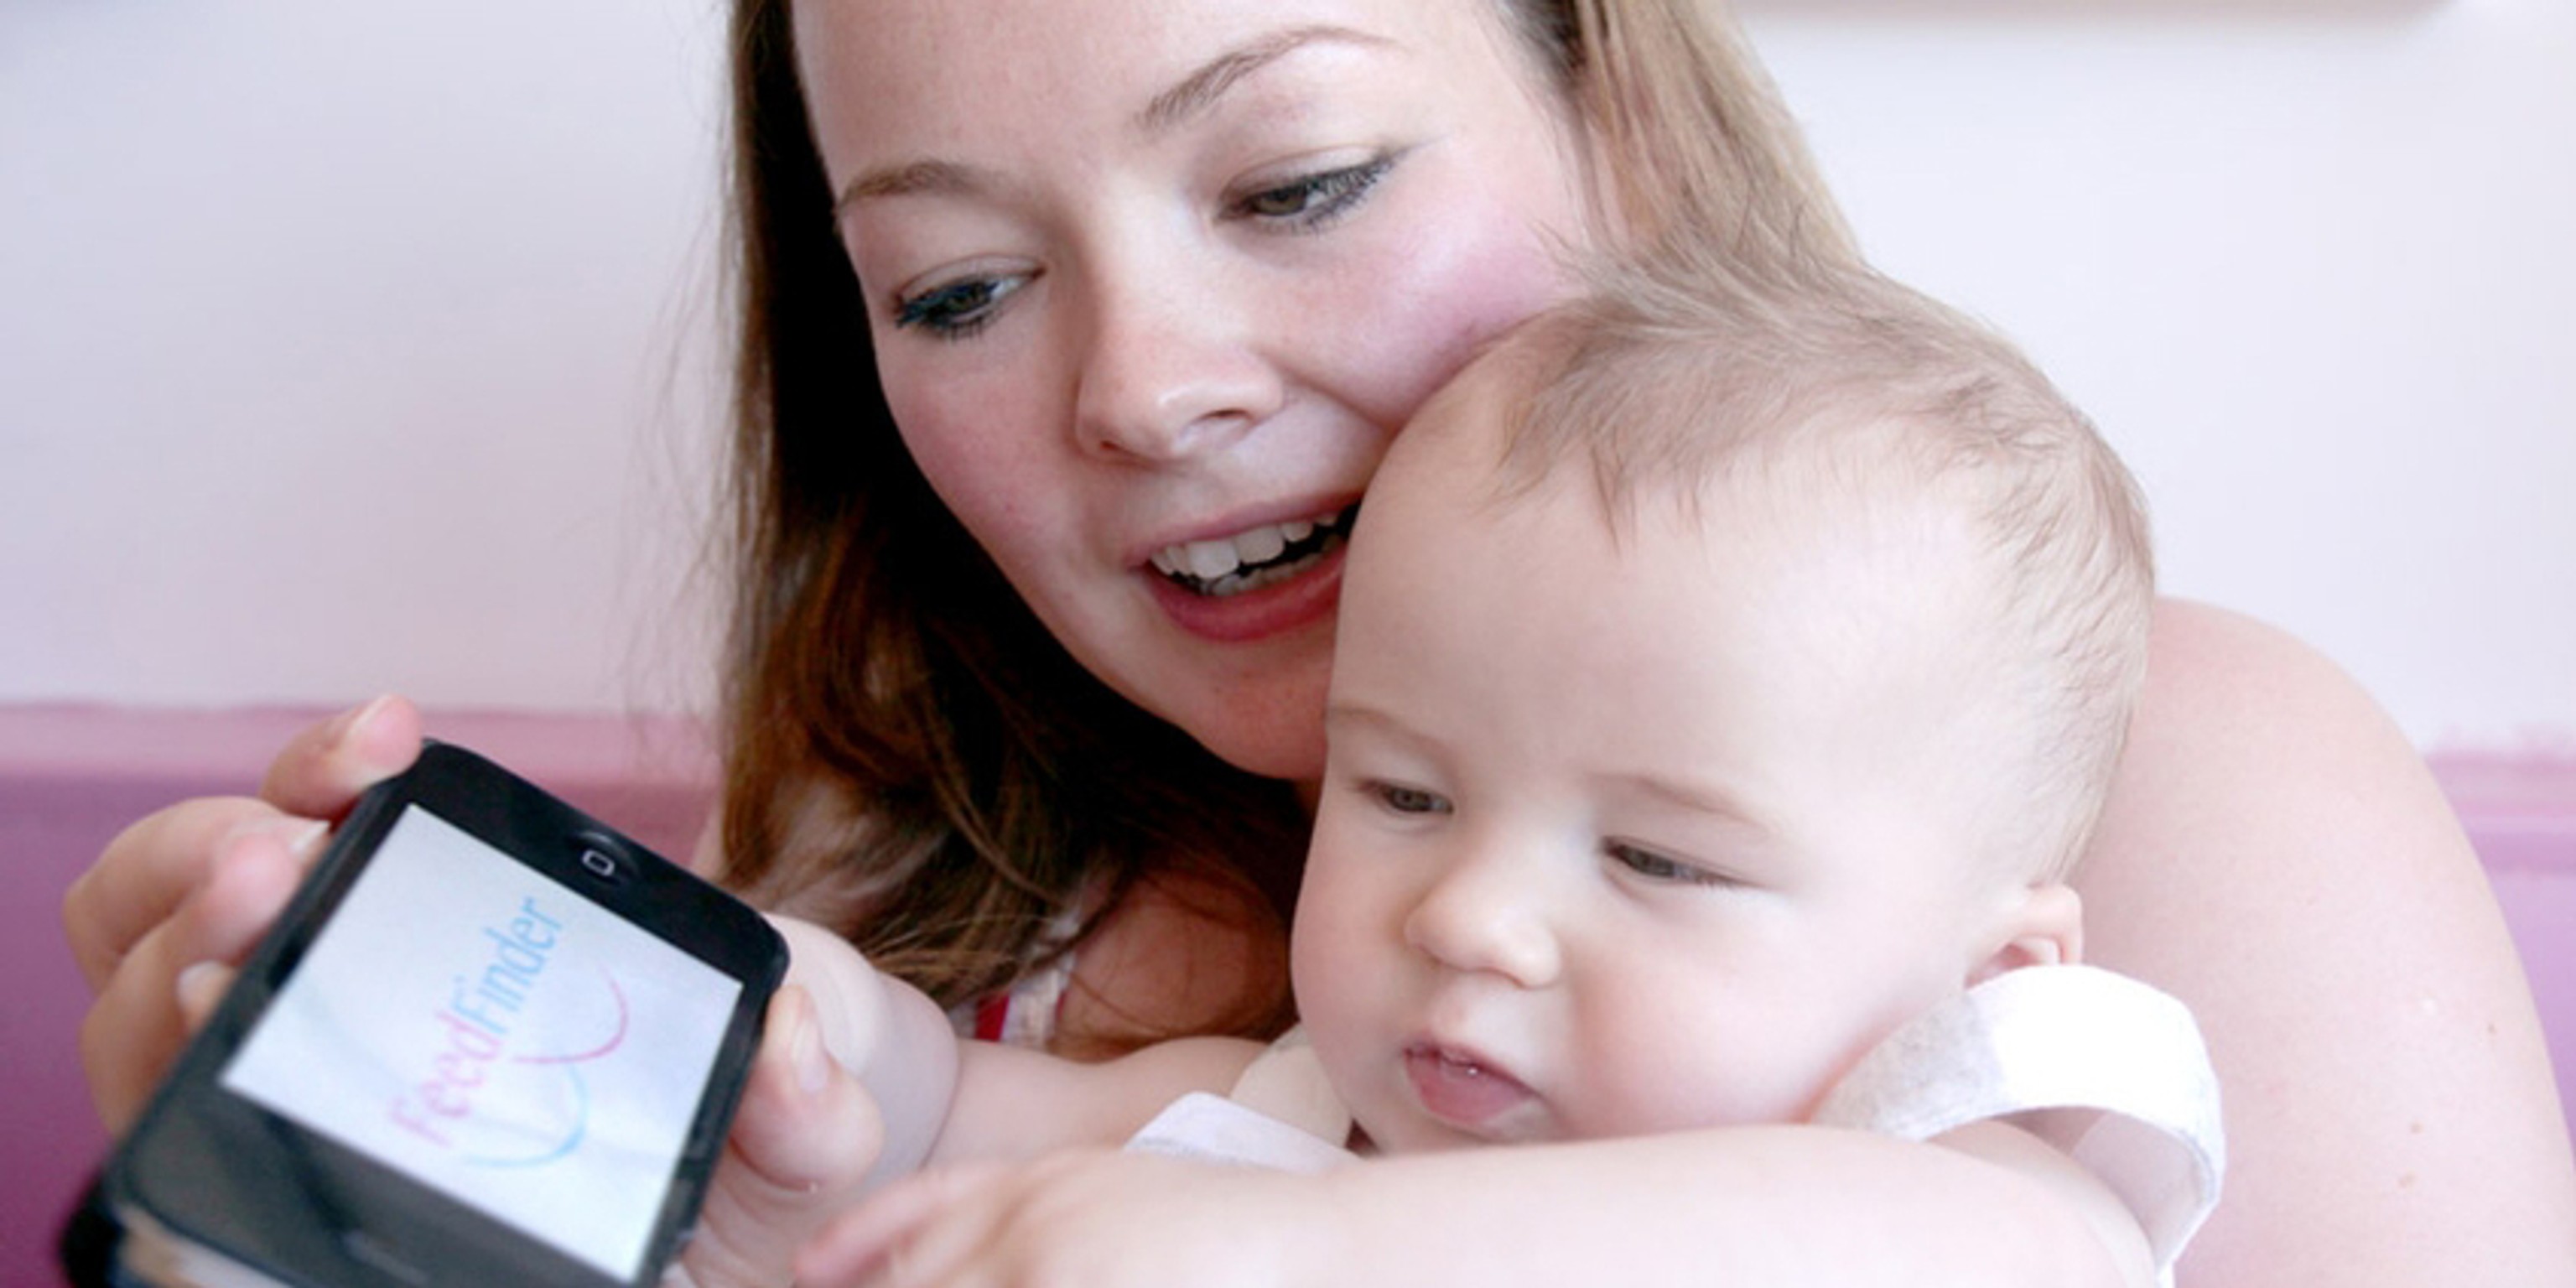 FeedFinder app: TripAdvisor for breastfeeding